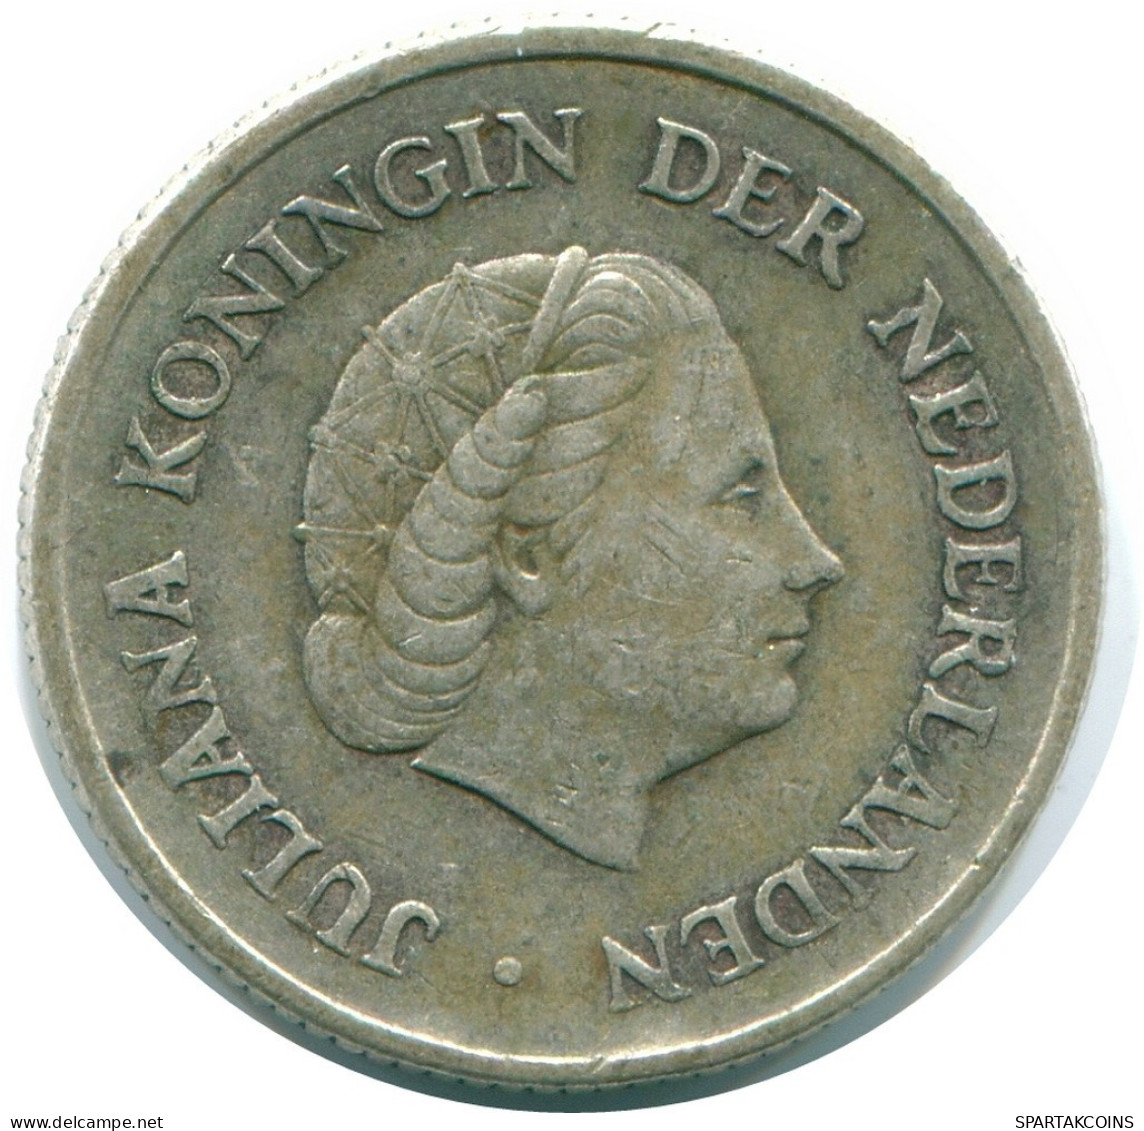 1/4 GULDEN 1967 NETHERLANDS ANTILLES SILVER Colonial Coin #NL11597.4.U.A - Netherlands Antilles